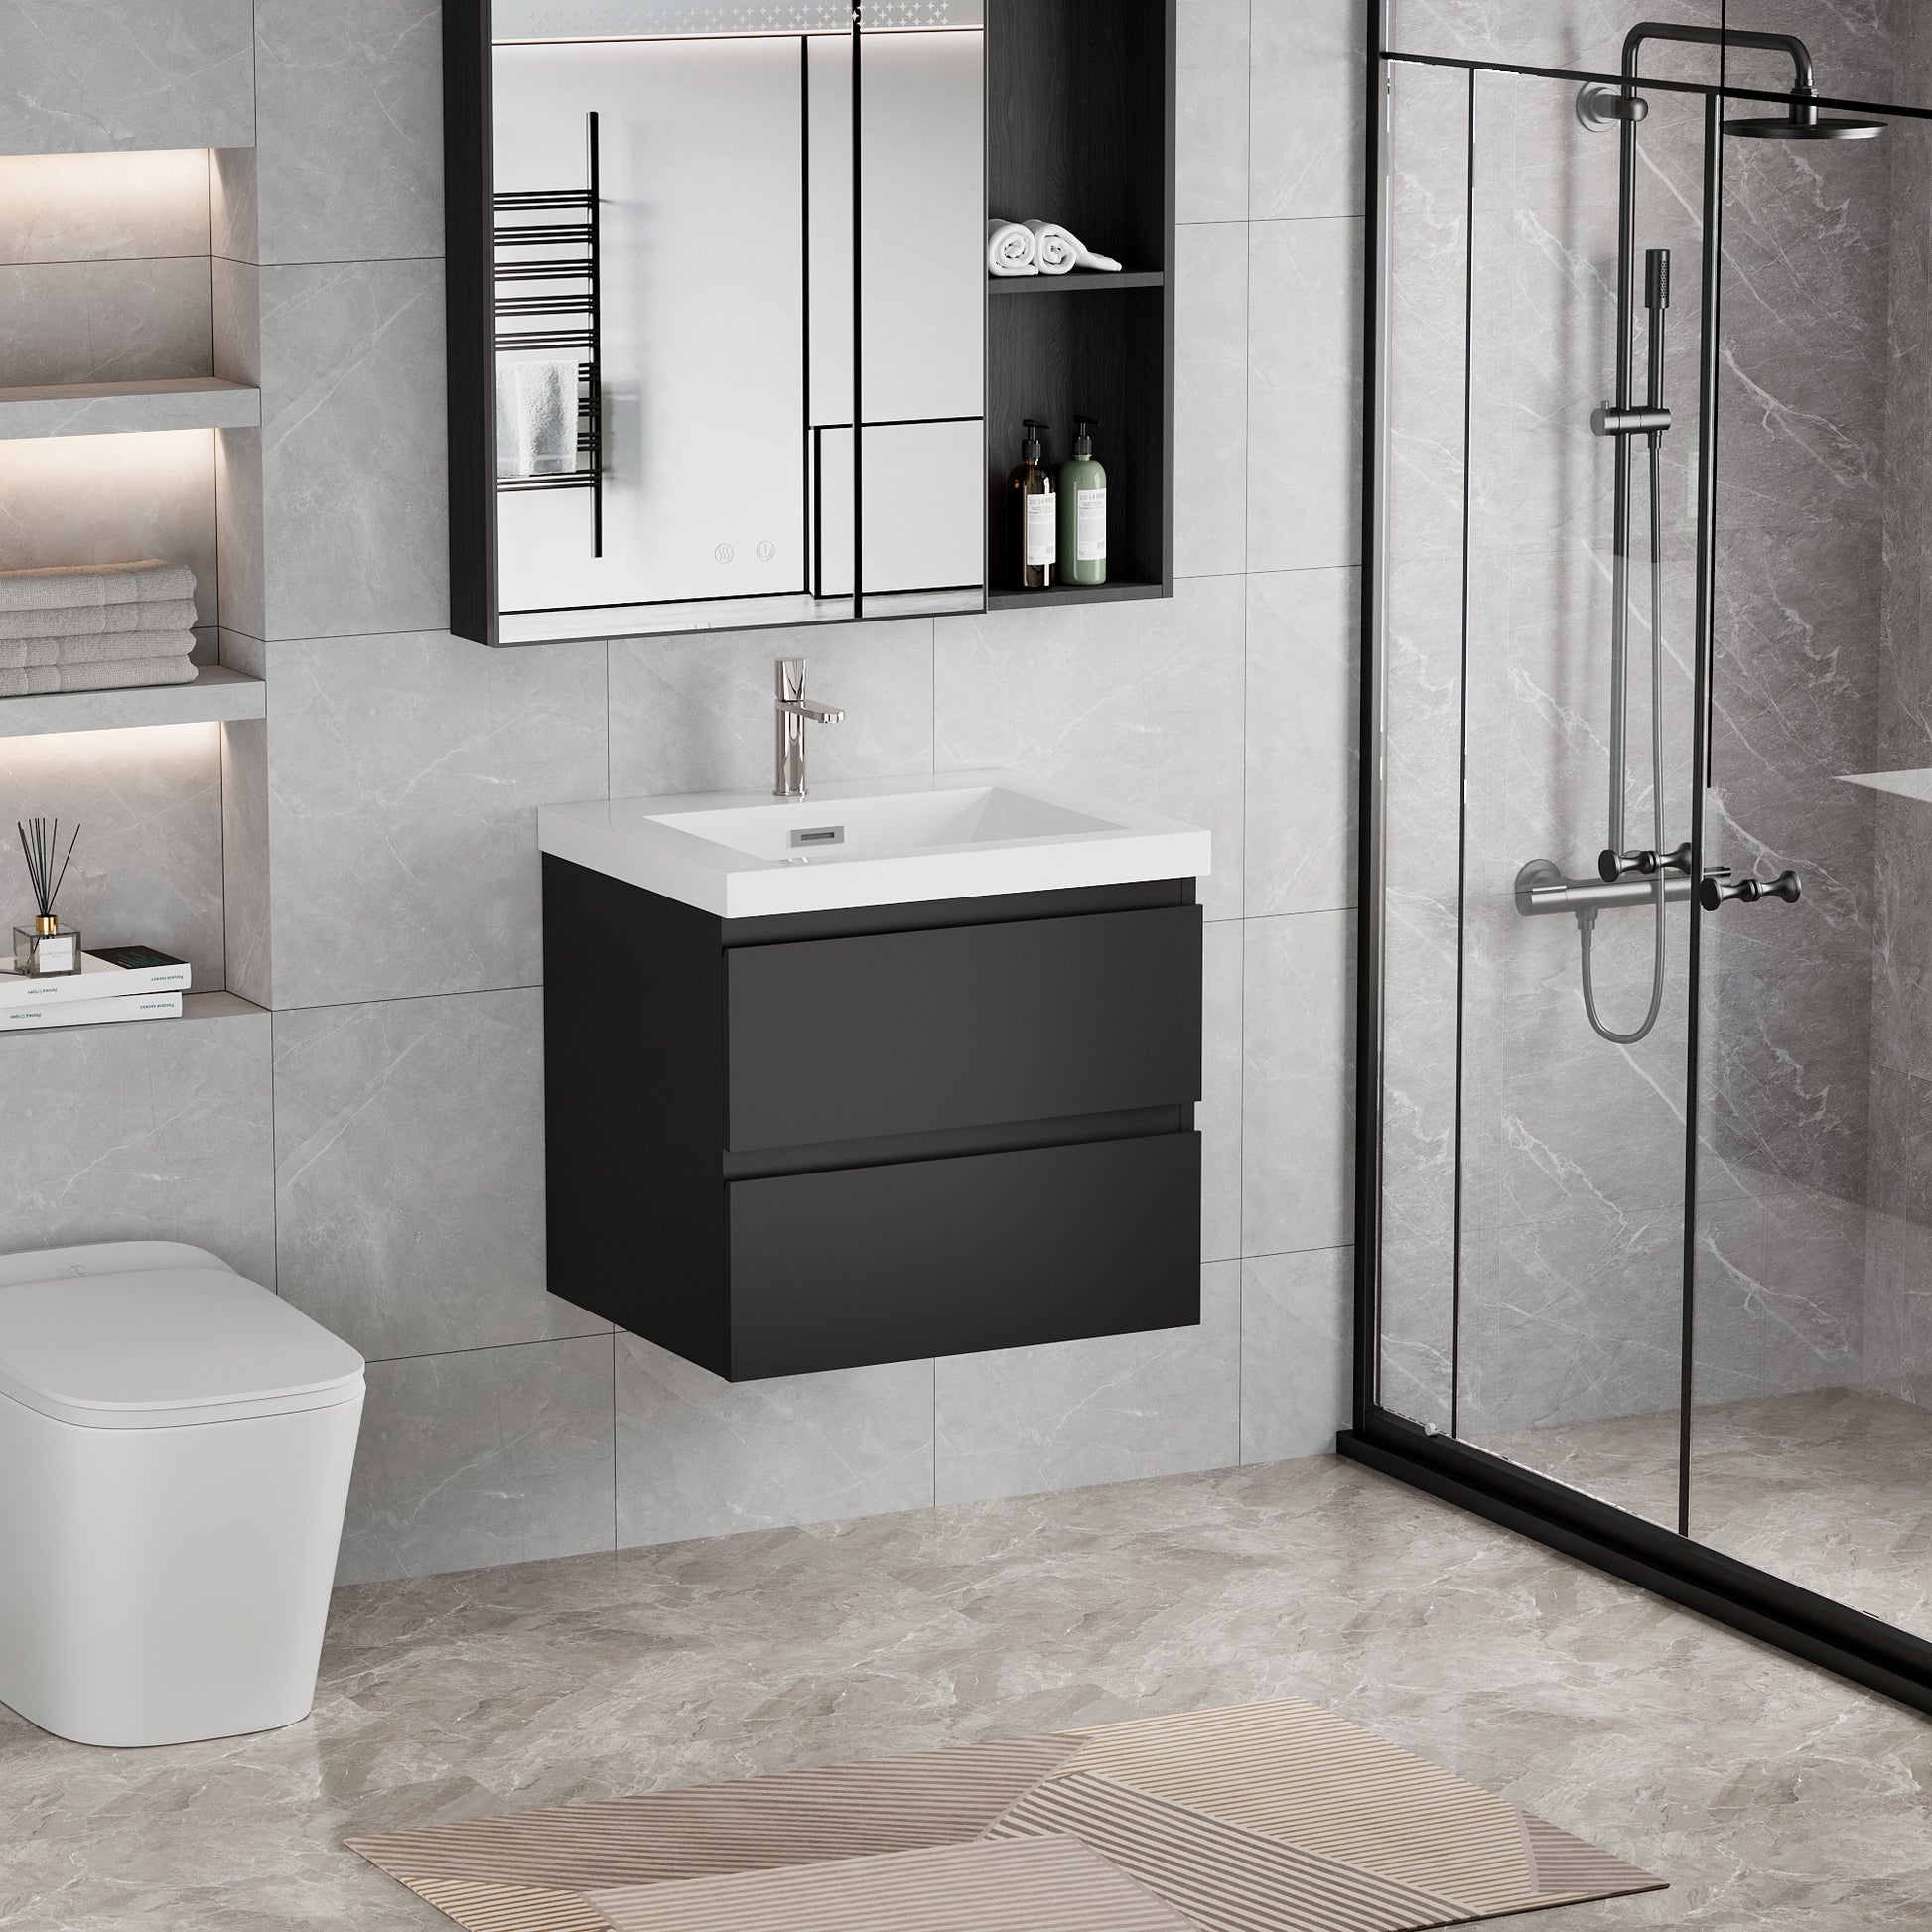 24" Floating Bathroom Vanity with Sink, Modern Wall 2-black-wall mounted-mdf